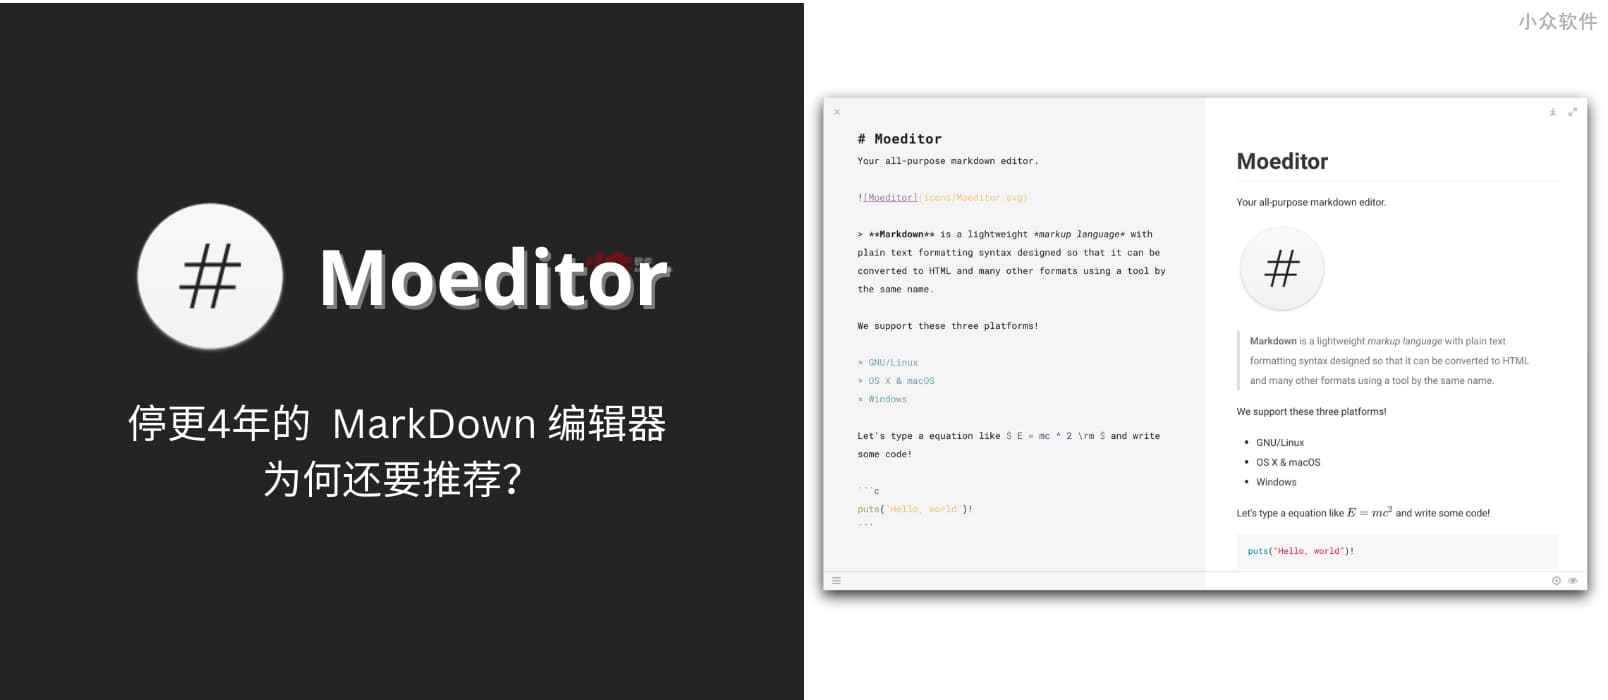 Moeditor - 为何要推荐一款已停更 4 年的 MarkDown 编辑器？